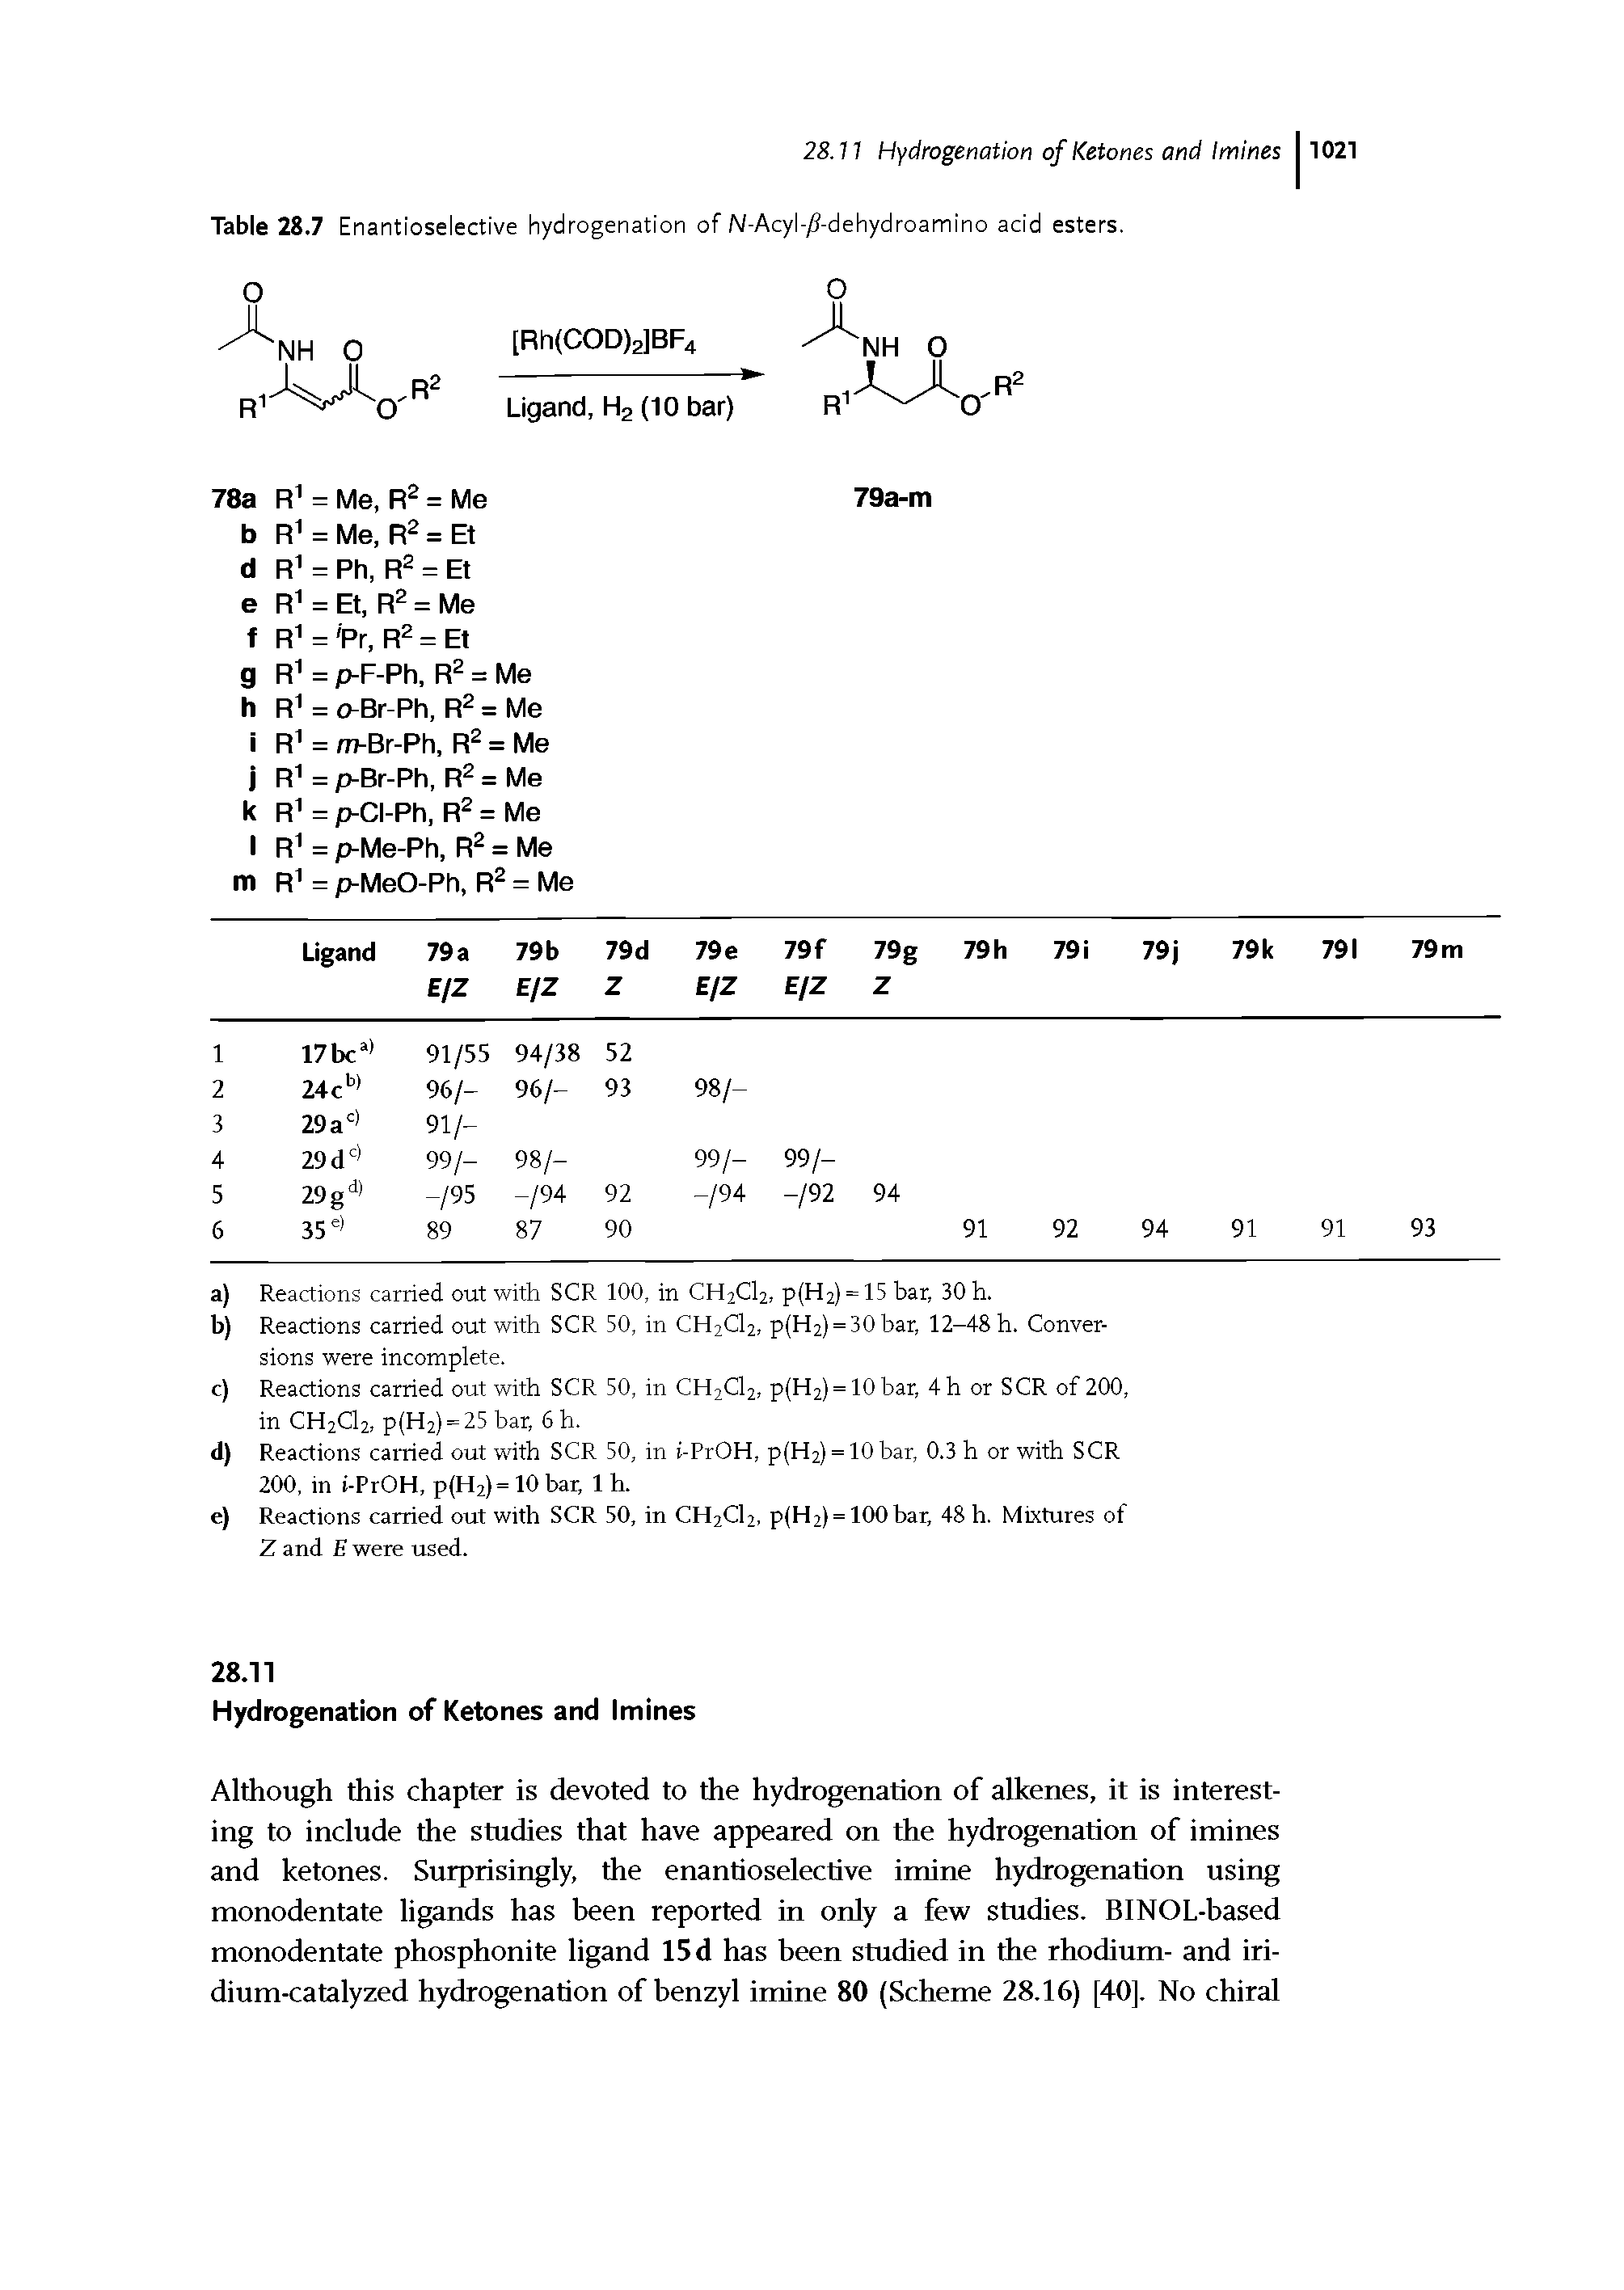 Table 28.7 Enantioselective hydrogenation of N-Acyl-jS-dehydroamino acid esters.